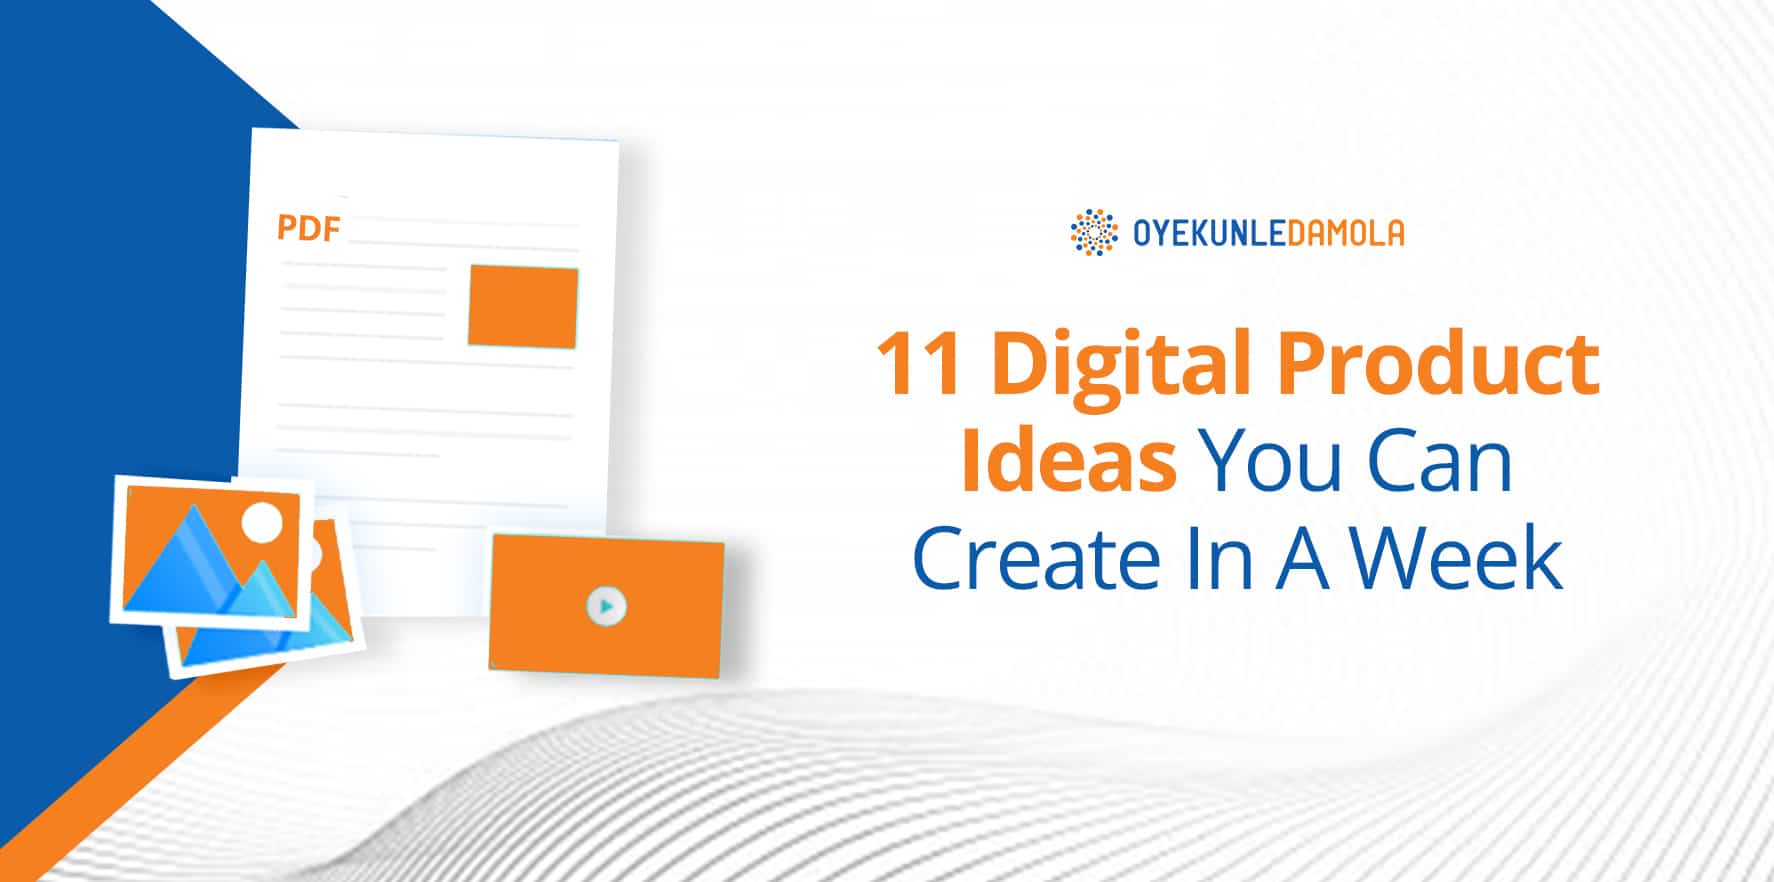 https://oyekunledamola.com/wp-content/uploads/2021/07/11-Digital-Product-Ideas-you-can-Create-in-a-week-2.jpg